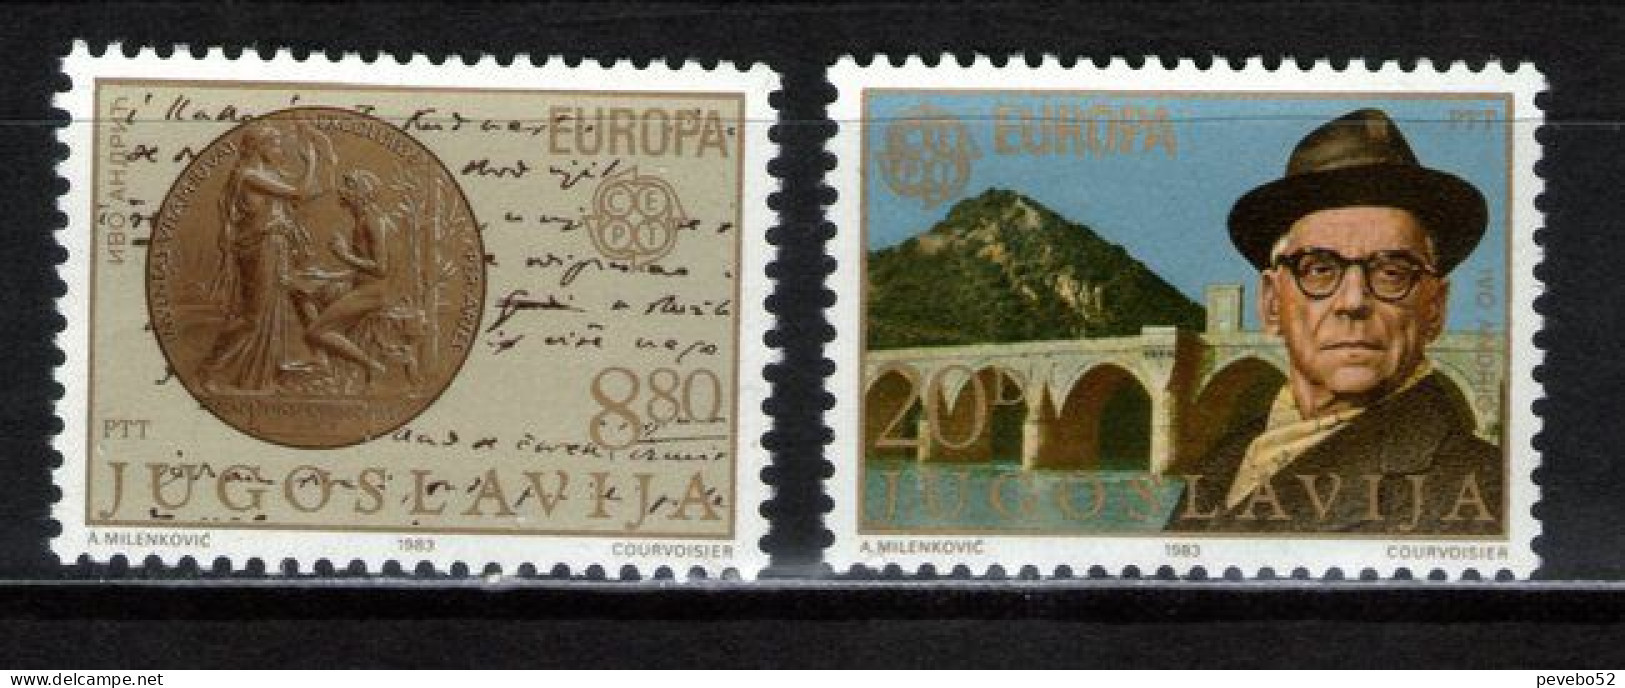 YUGOSLAVIA 1983 - EUROPA Stamps,Inventions,Ivo Andric MNH - Ungebraucht